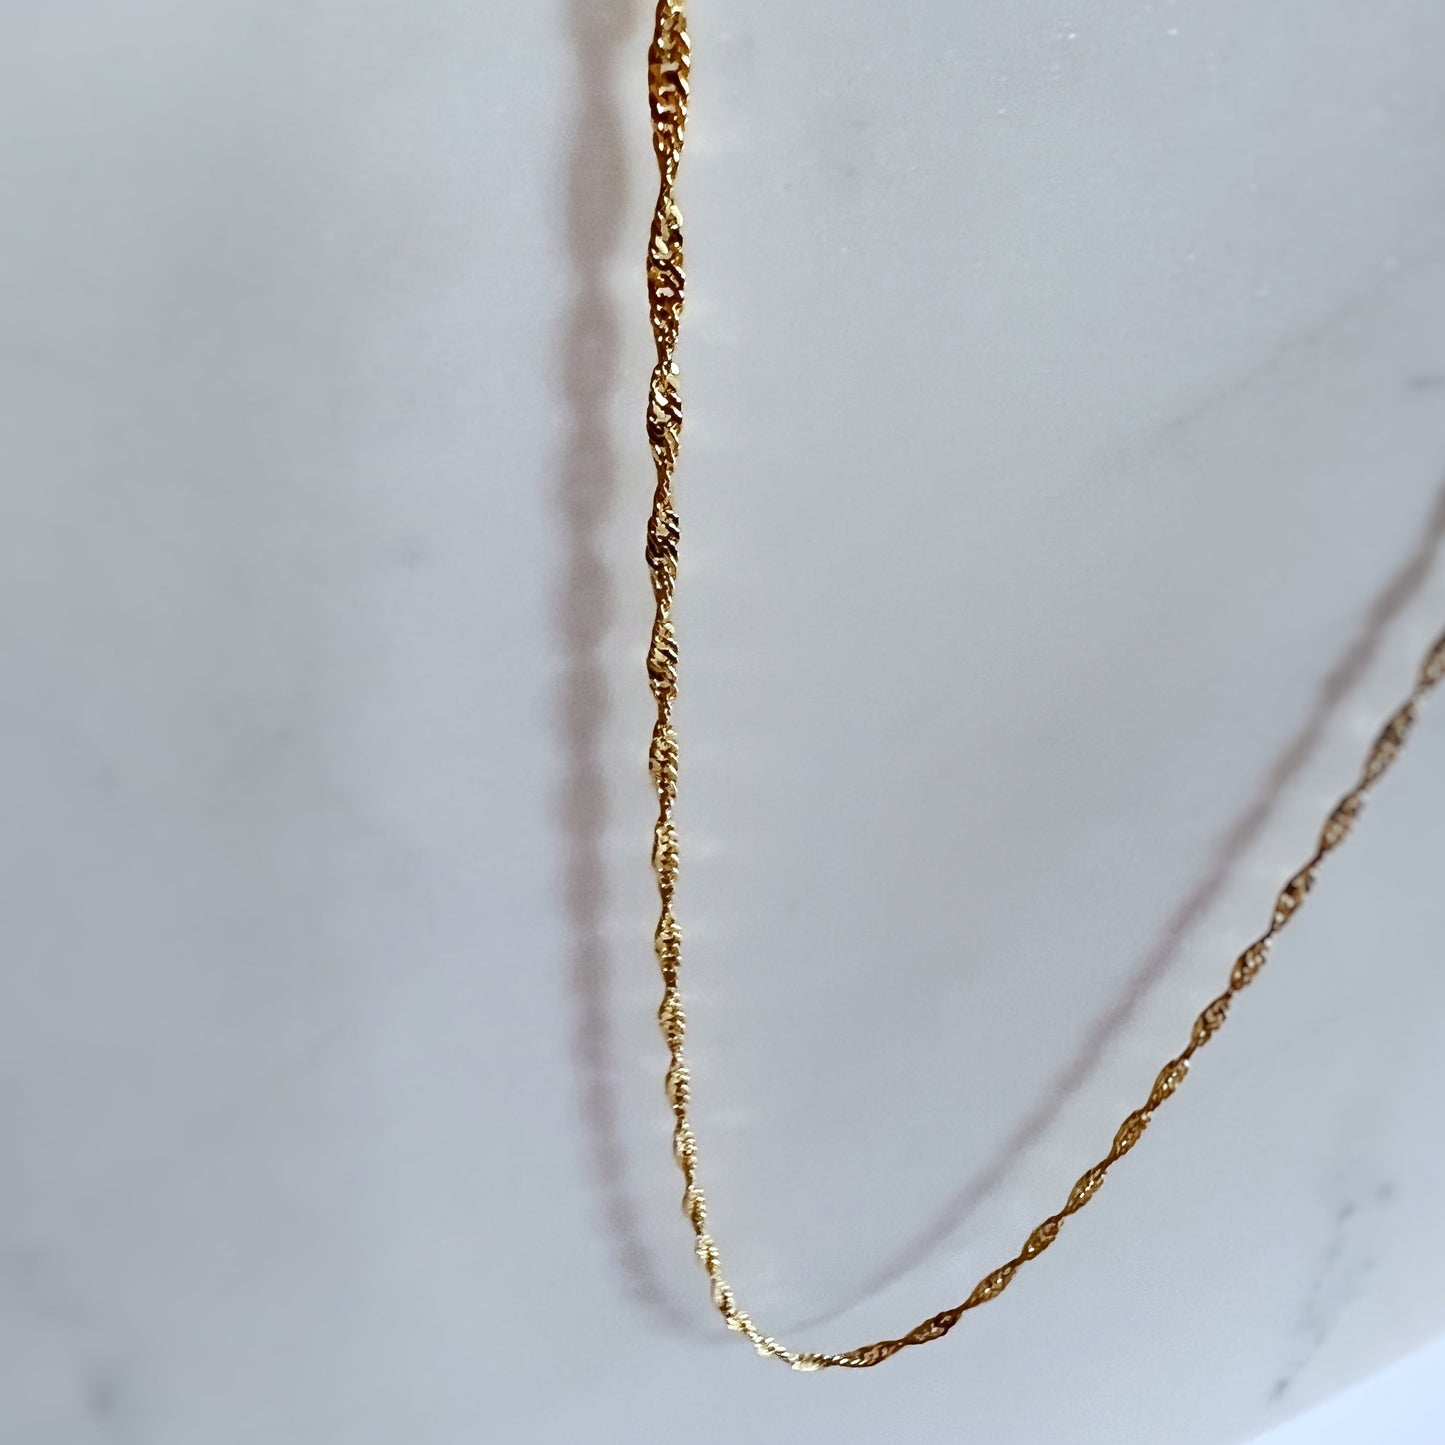 Singapore Chain Necklace